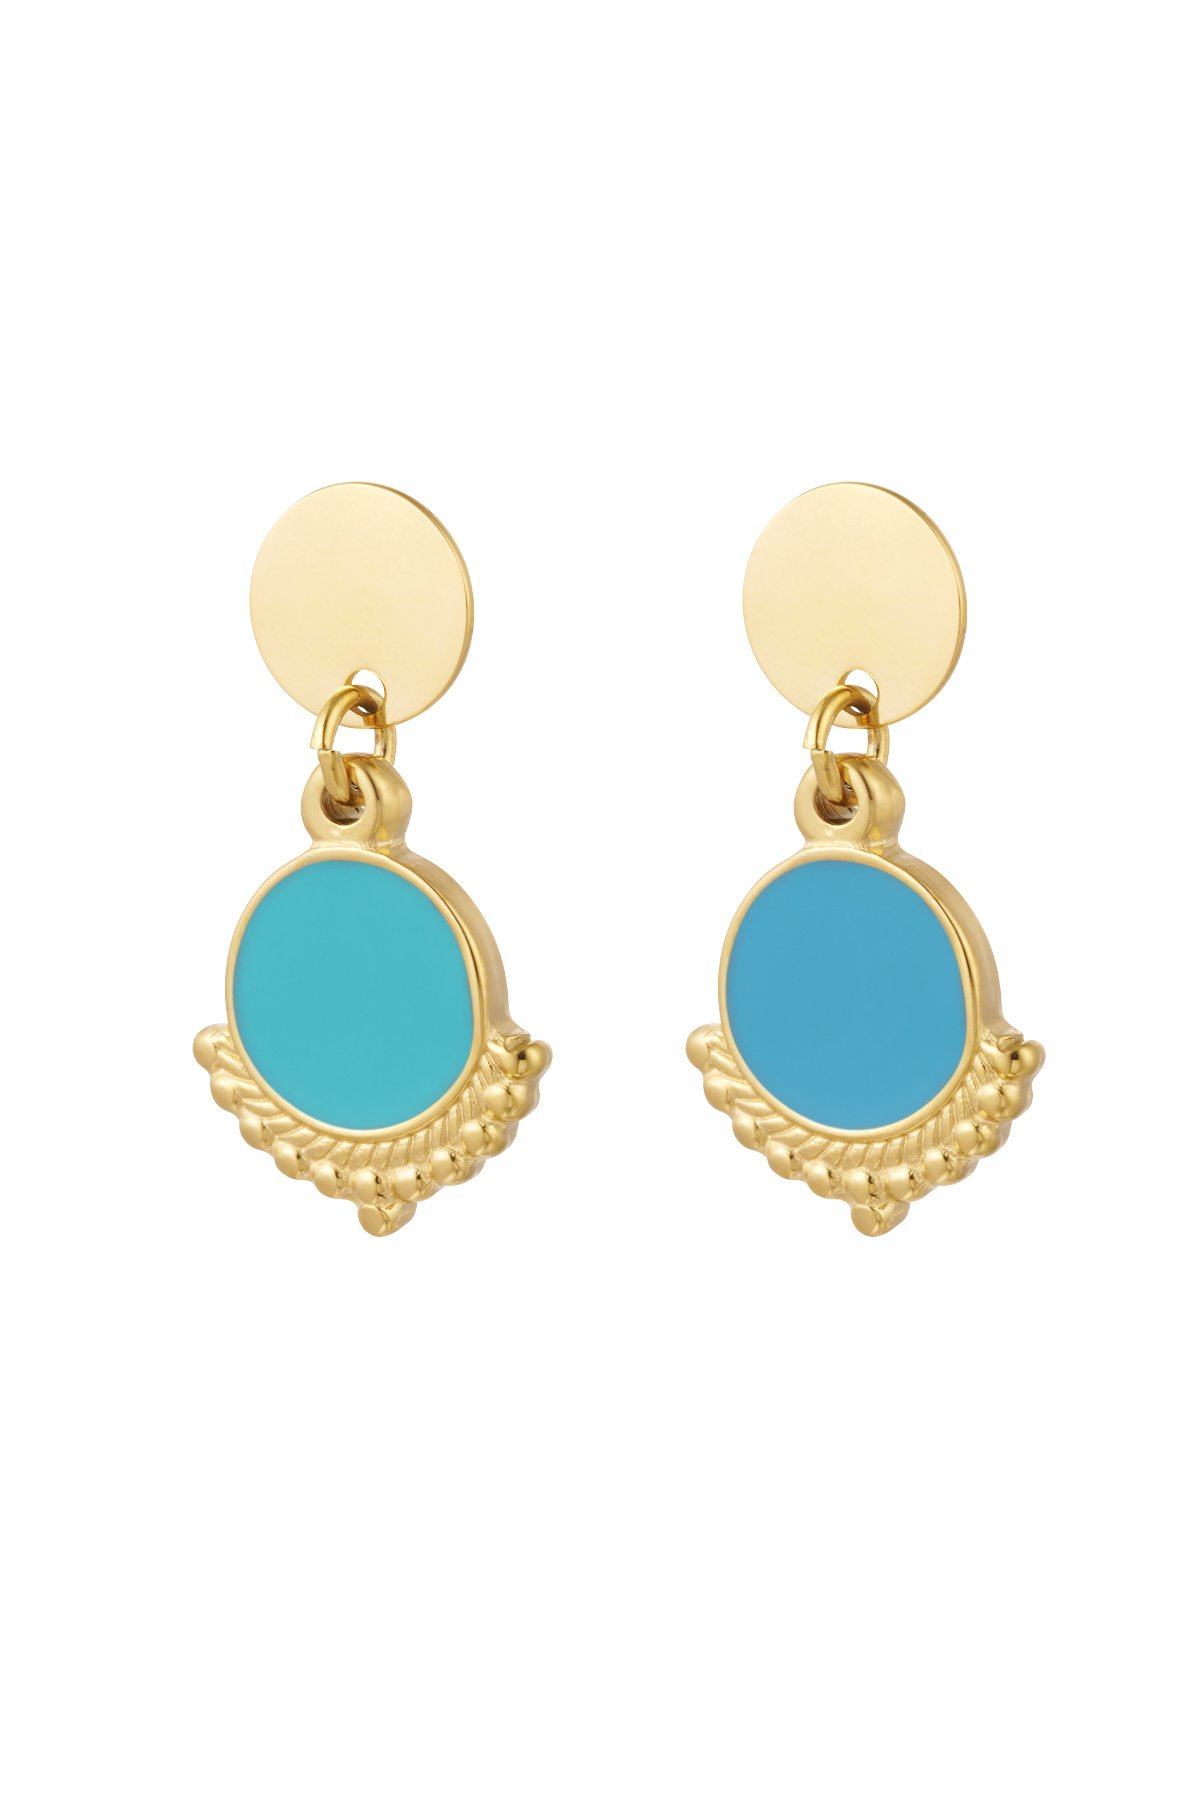 Ohrringe elegant mit Farbe - Gold/Blau 